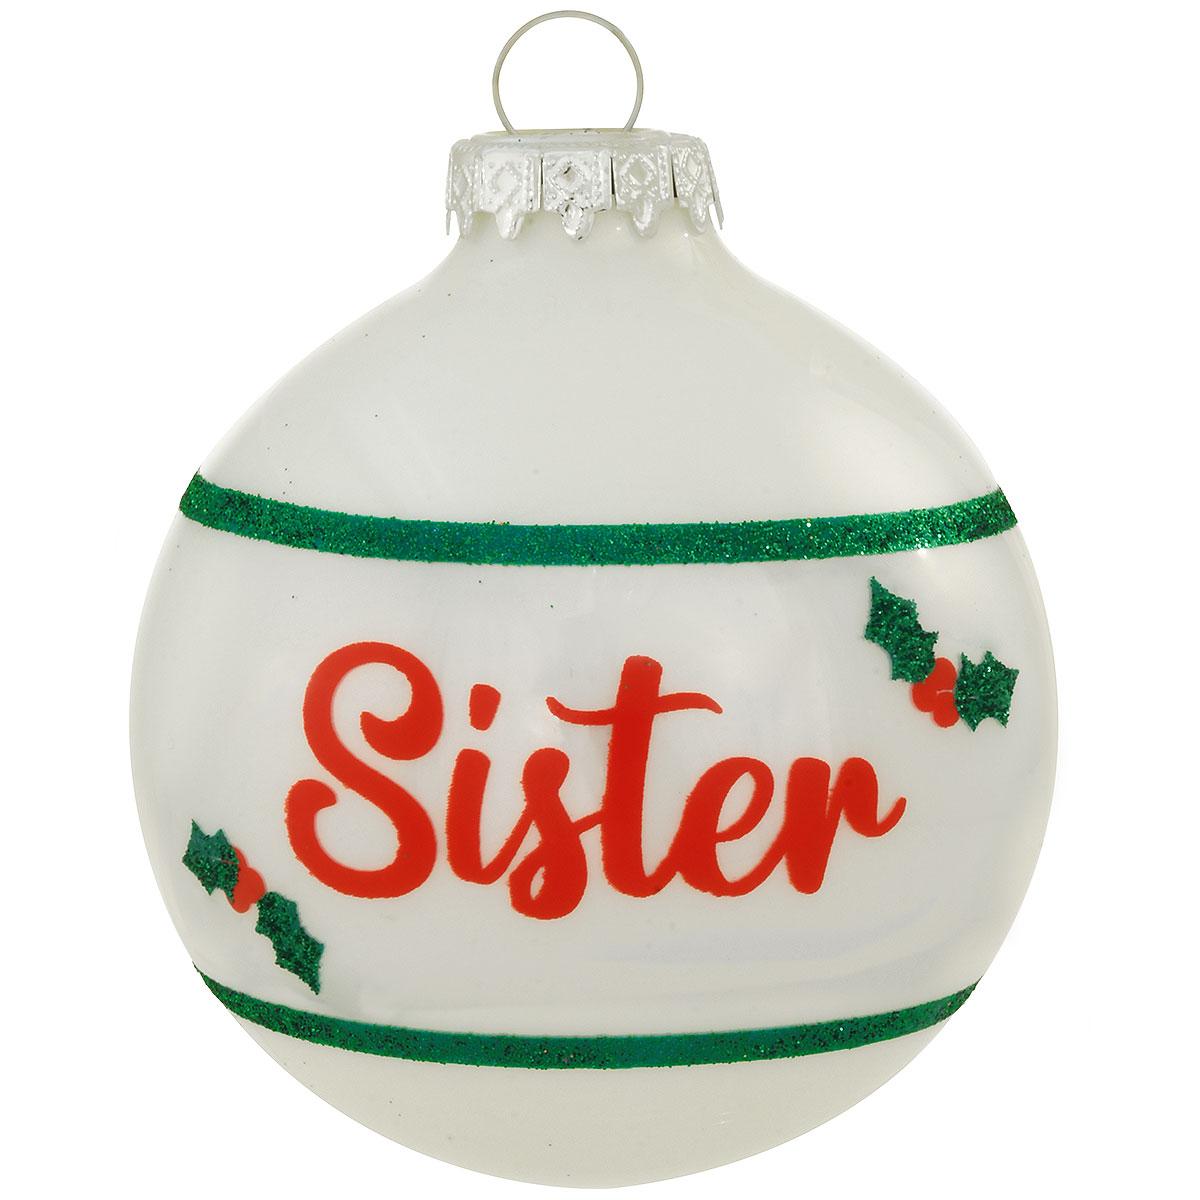 Sister Glass Ornament